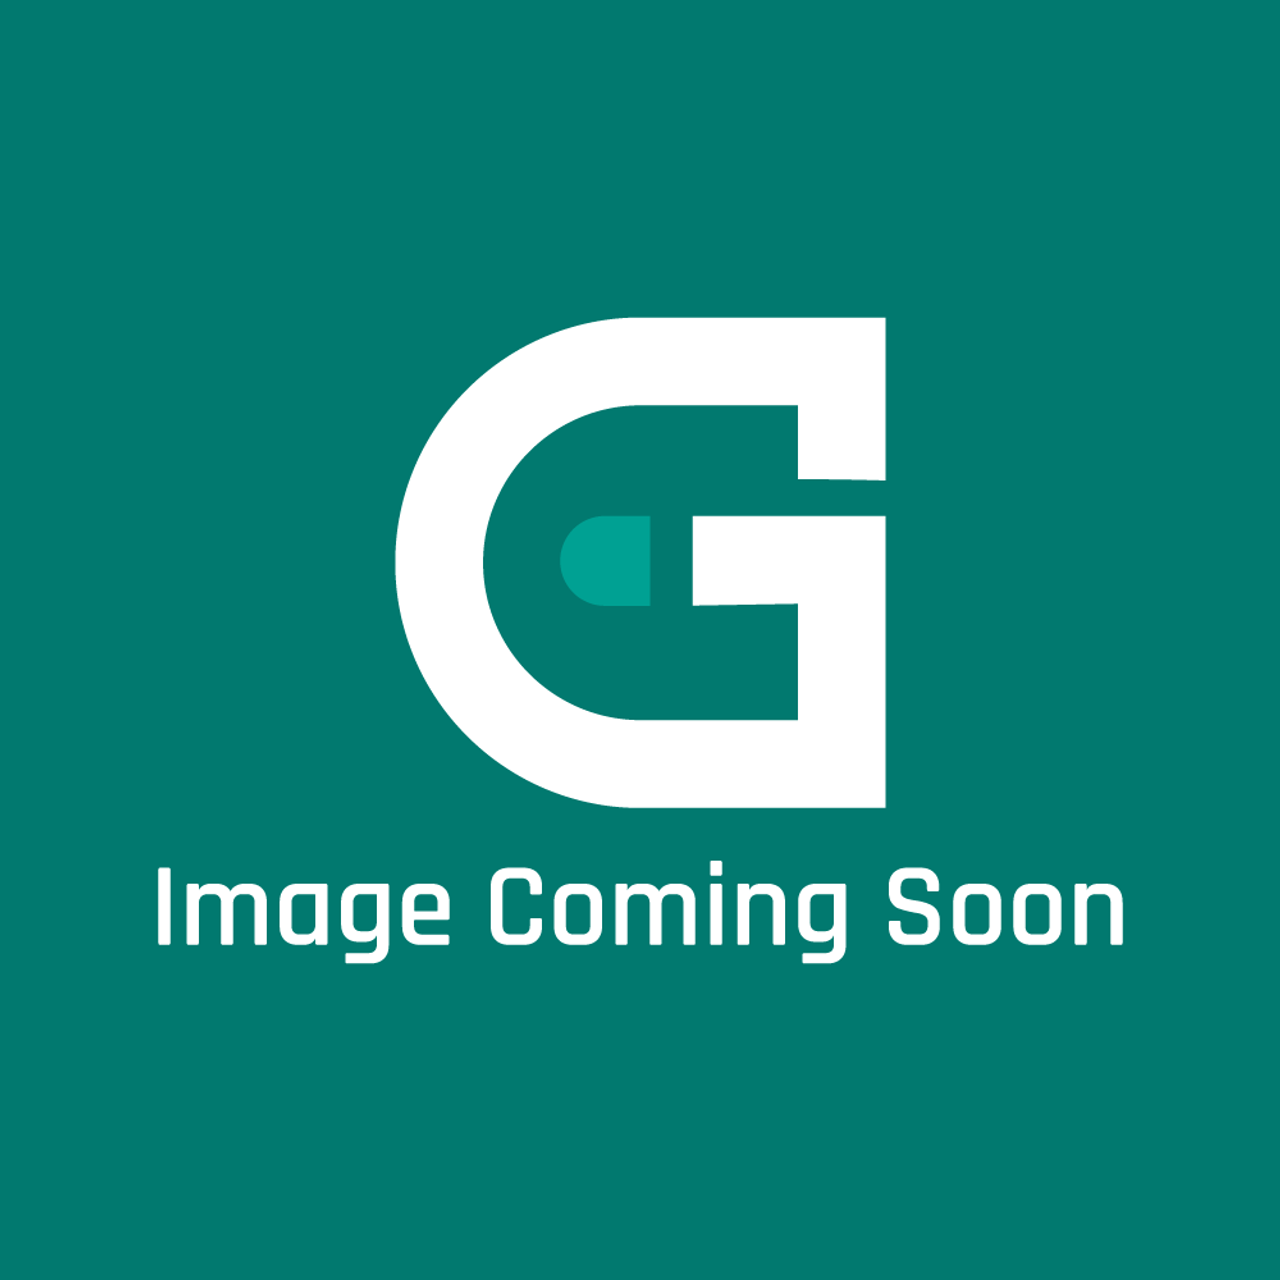 Viking G5004570 - SIDE SHELF ASSY CARTS - Image Coming Soon!